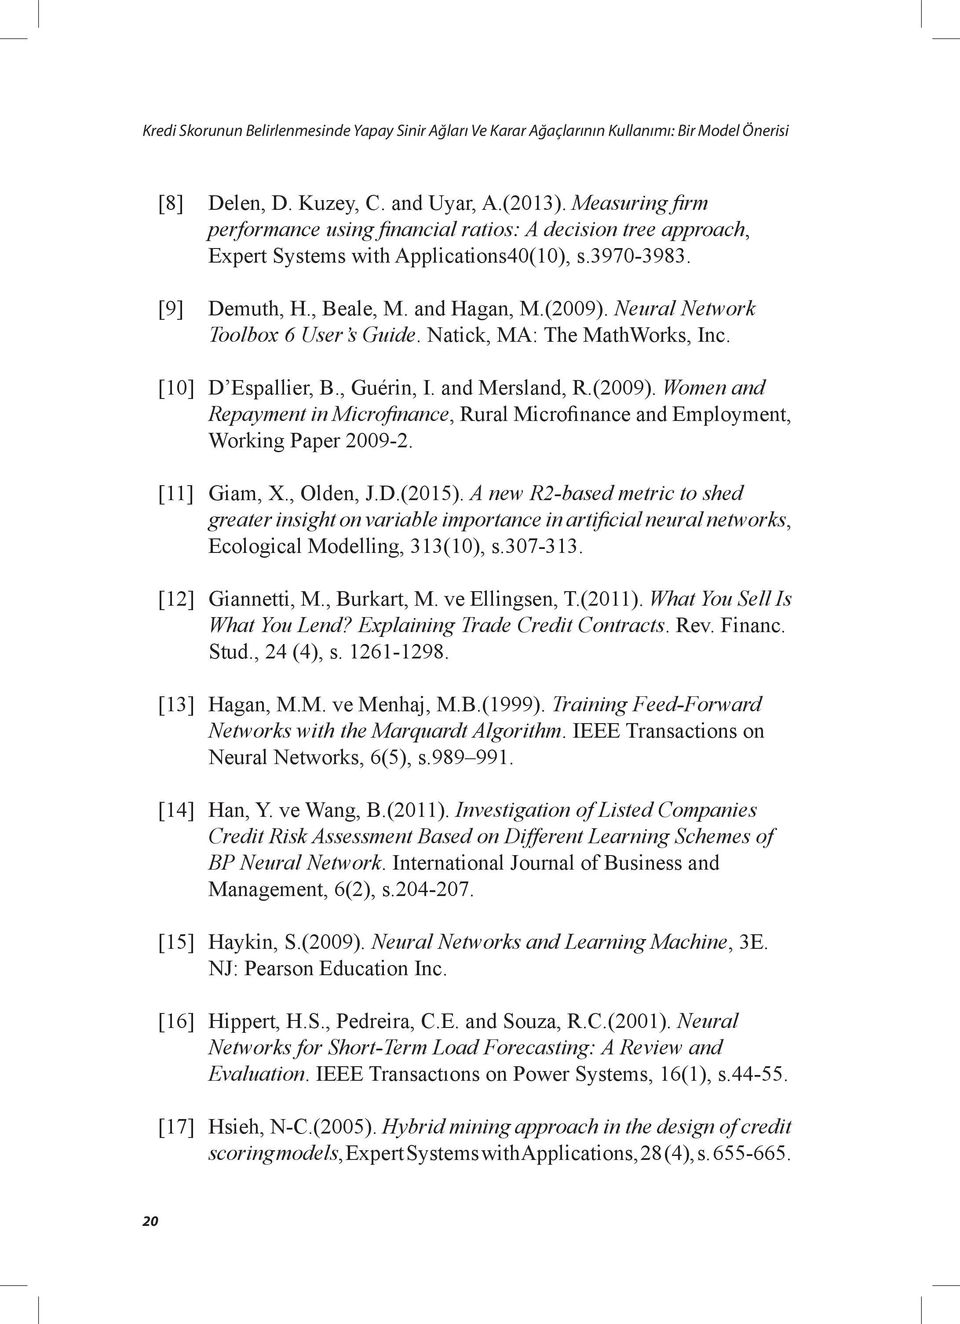 Neural Network Toolbox 6 User s Guide. Natick, MA: The MathWorks, Inc. [10] D Espallier, B., Guérin, I. and Mersland, R.(2009).